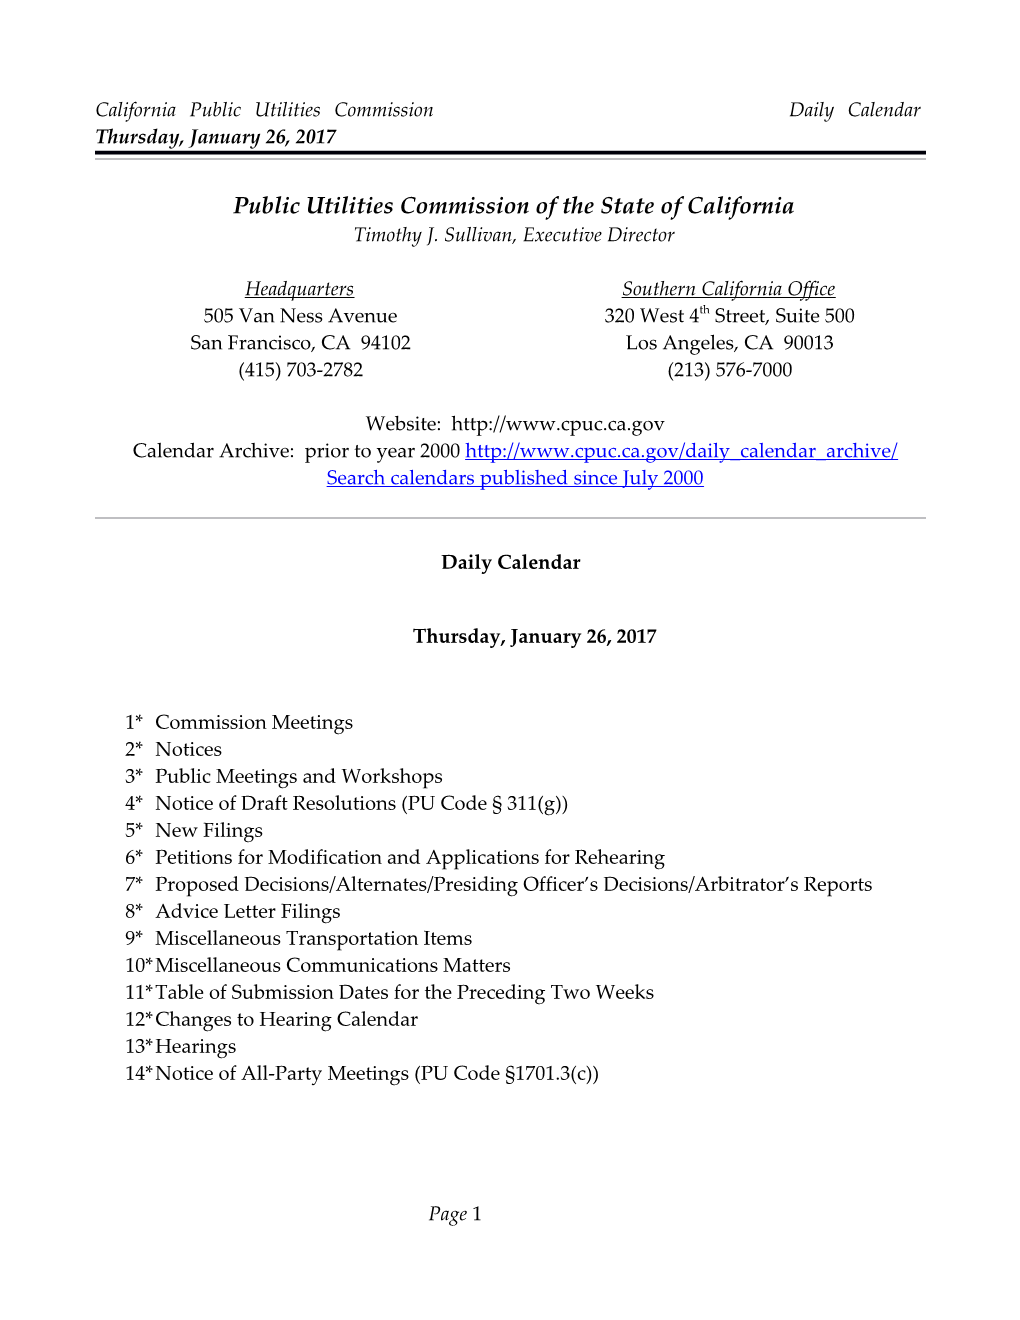 California Public Utilities Commission Daily Calendar Thursday, January 26, 2017